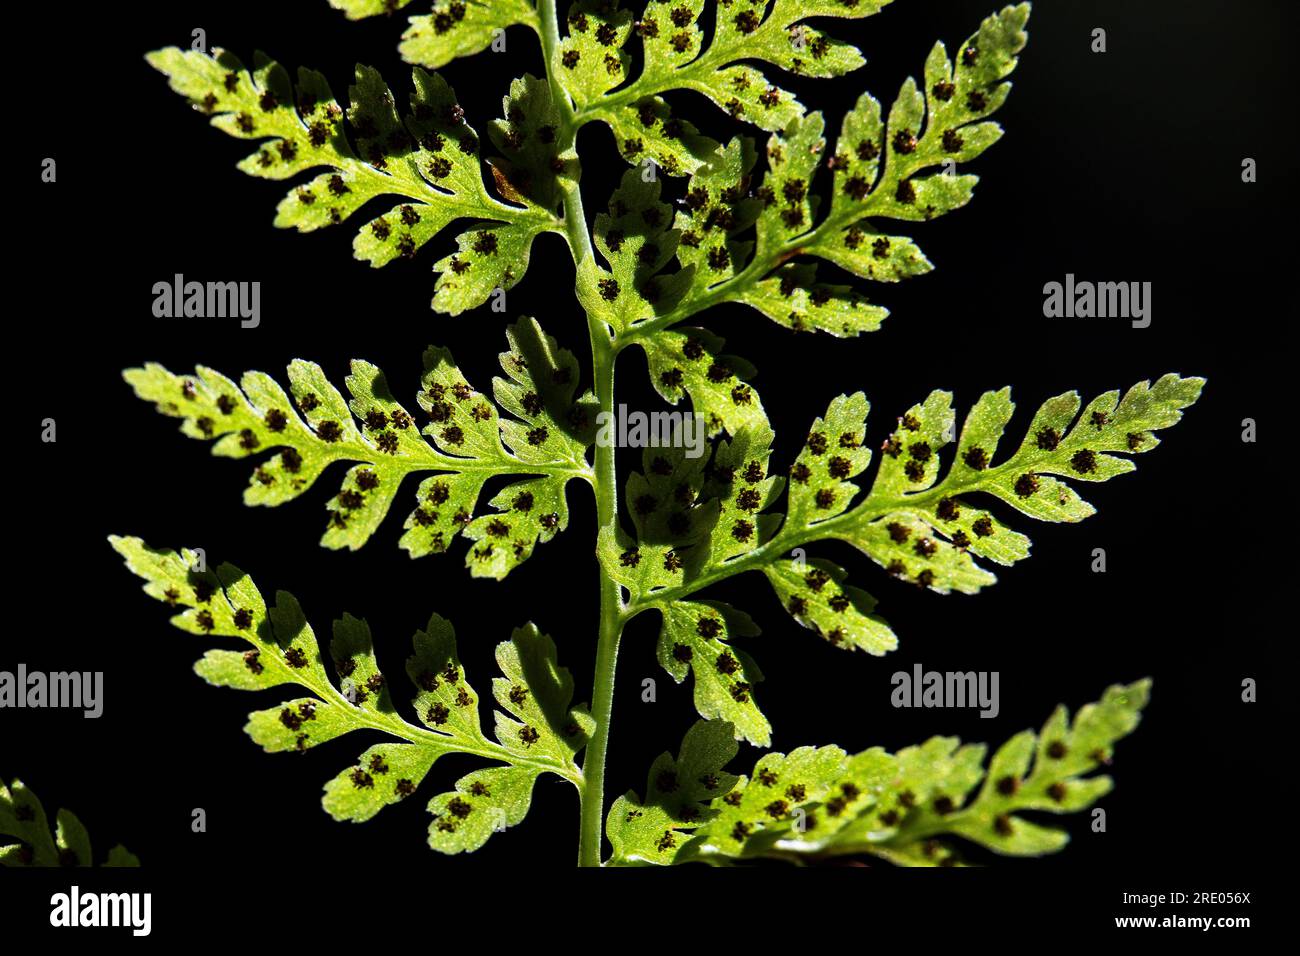 Black spleenwort (Asplenium adiantum-nigrum), underside of leaf, leaflets with sporangia against black background, Netherlands Stock Photo